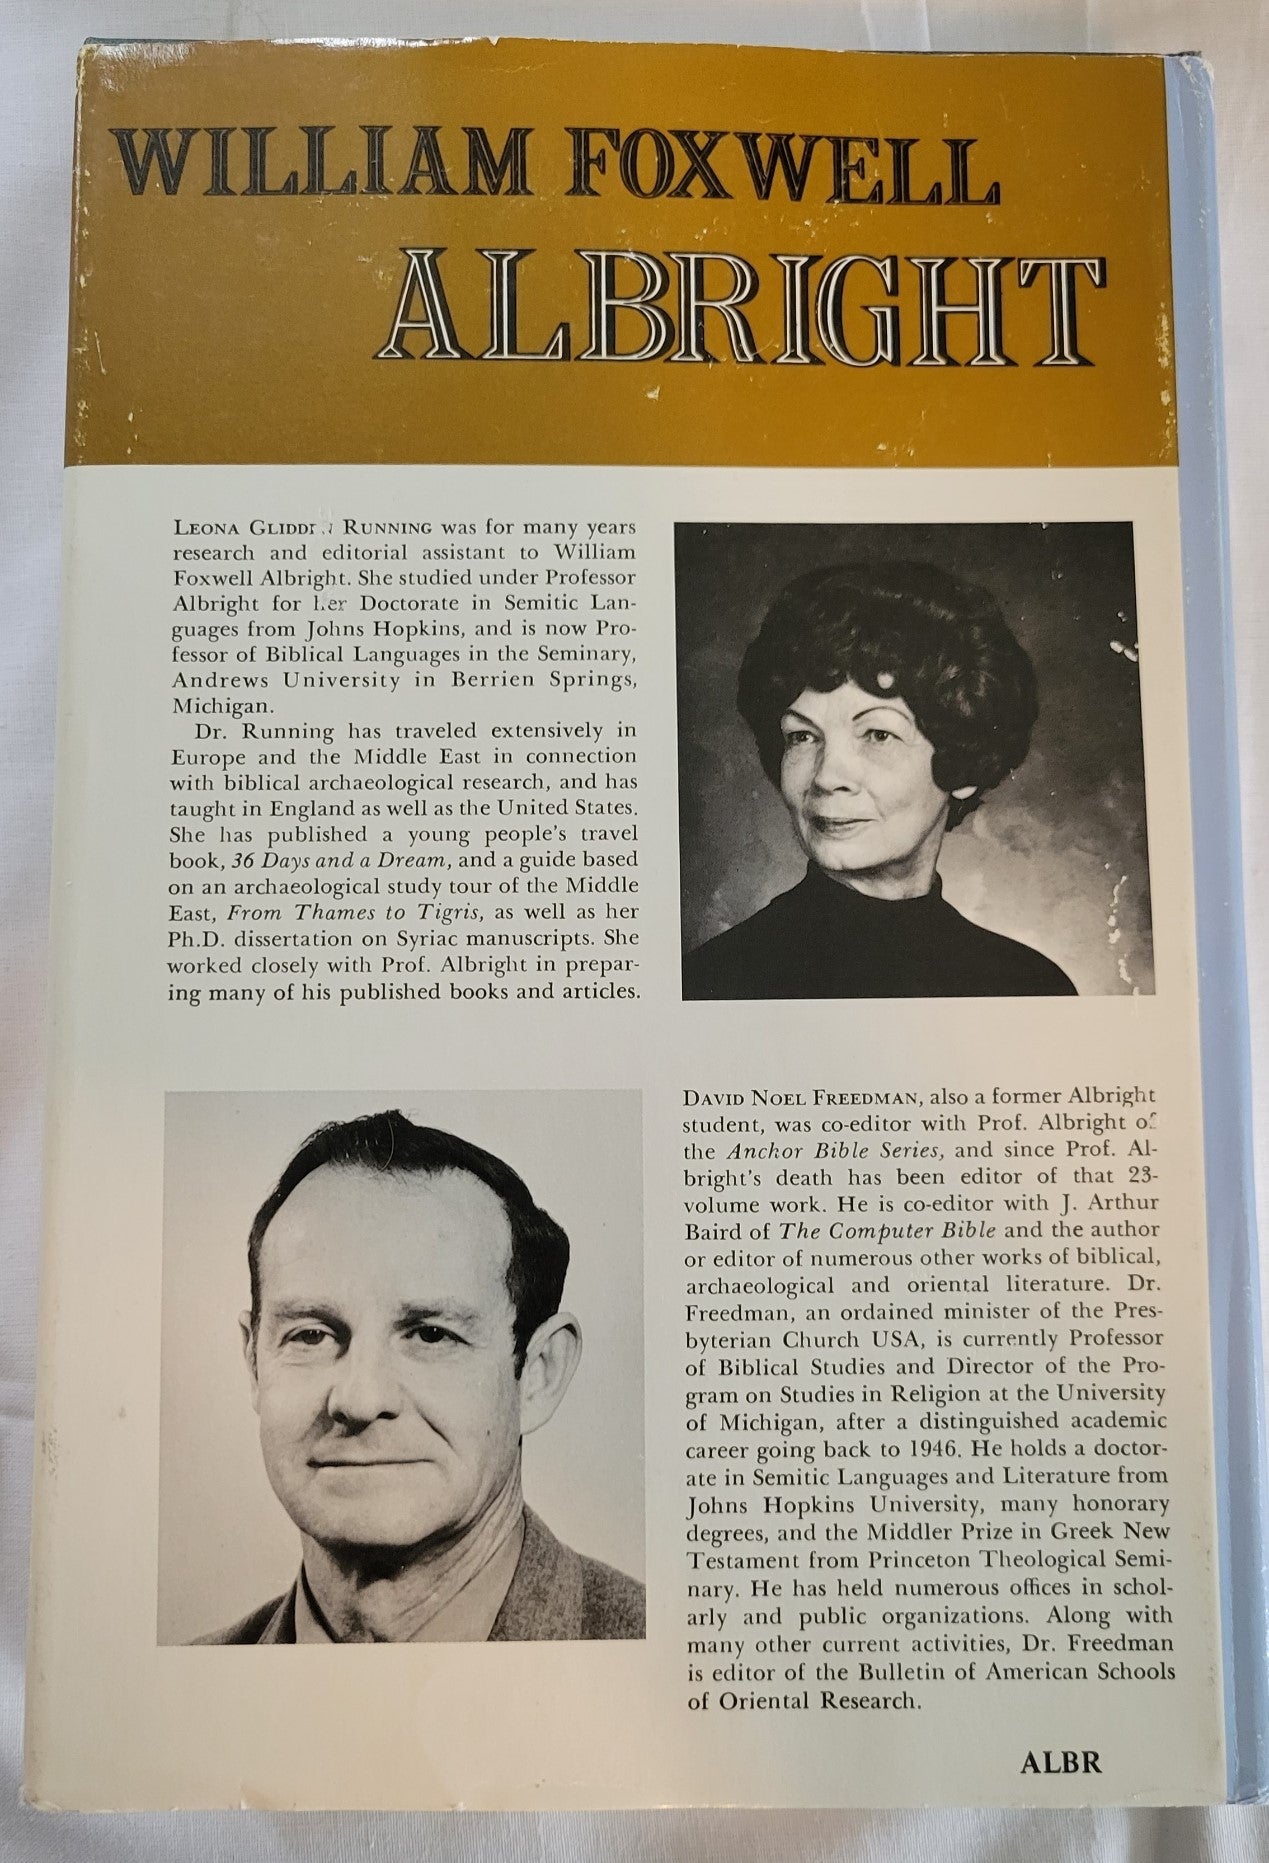 Used book for sale " William Foxwell Albright: A Twentieth-Century Genius” by Leona Glidden Running and David Noel Freedman. Back cover.